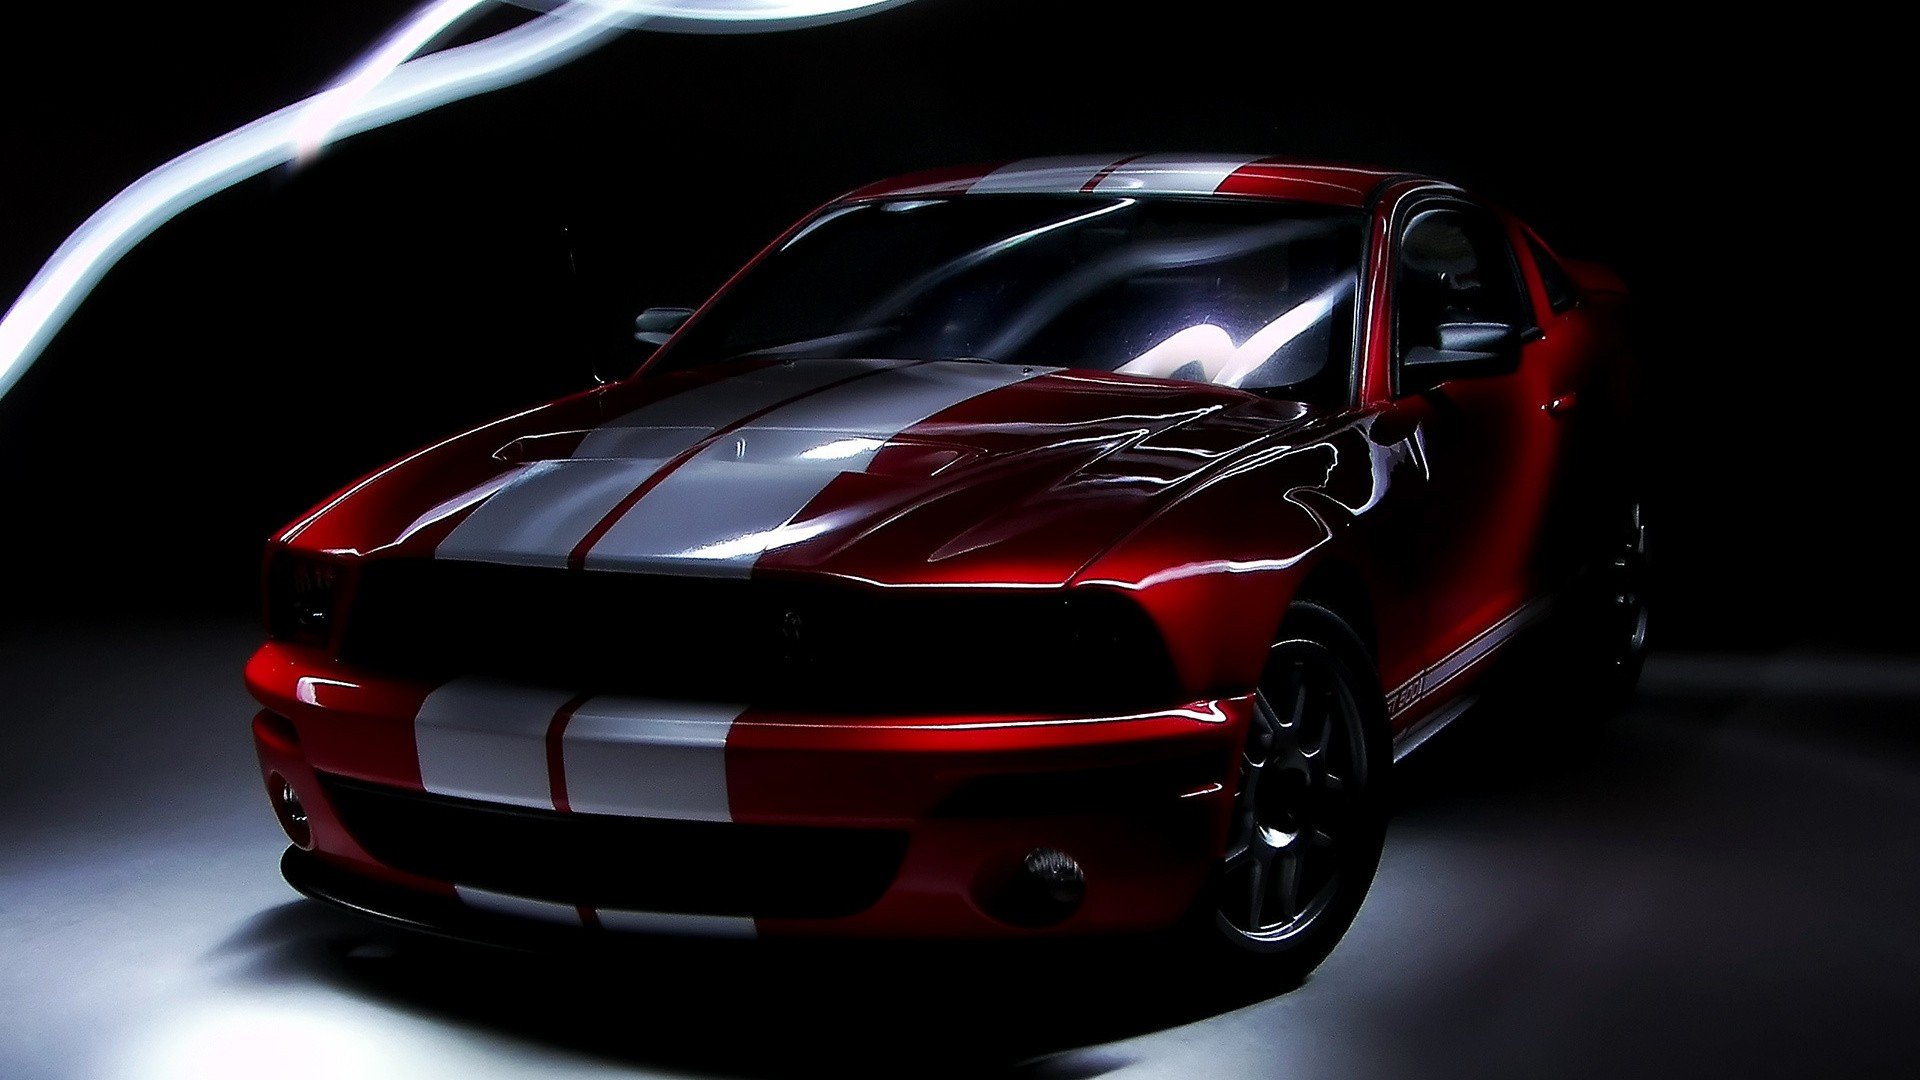 Best Ford Mustang Shelby GT500 Cobra wallpaper ID:239975 for High Resolution full hd desktop